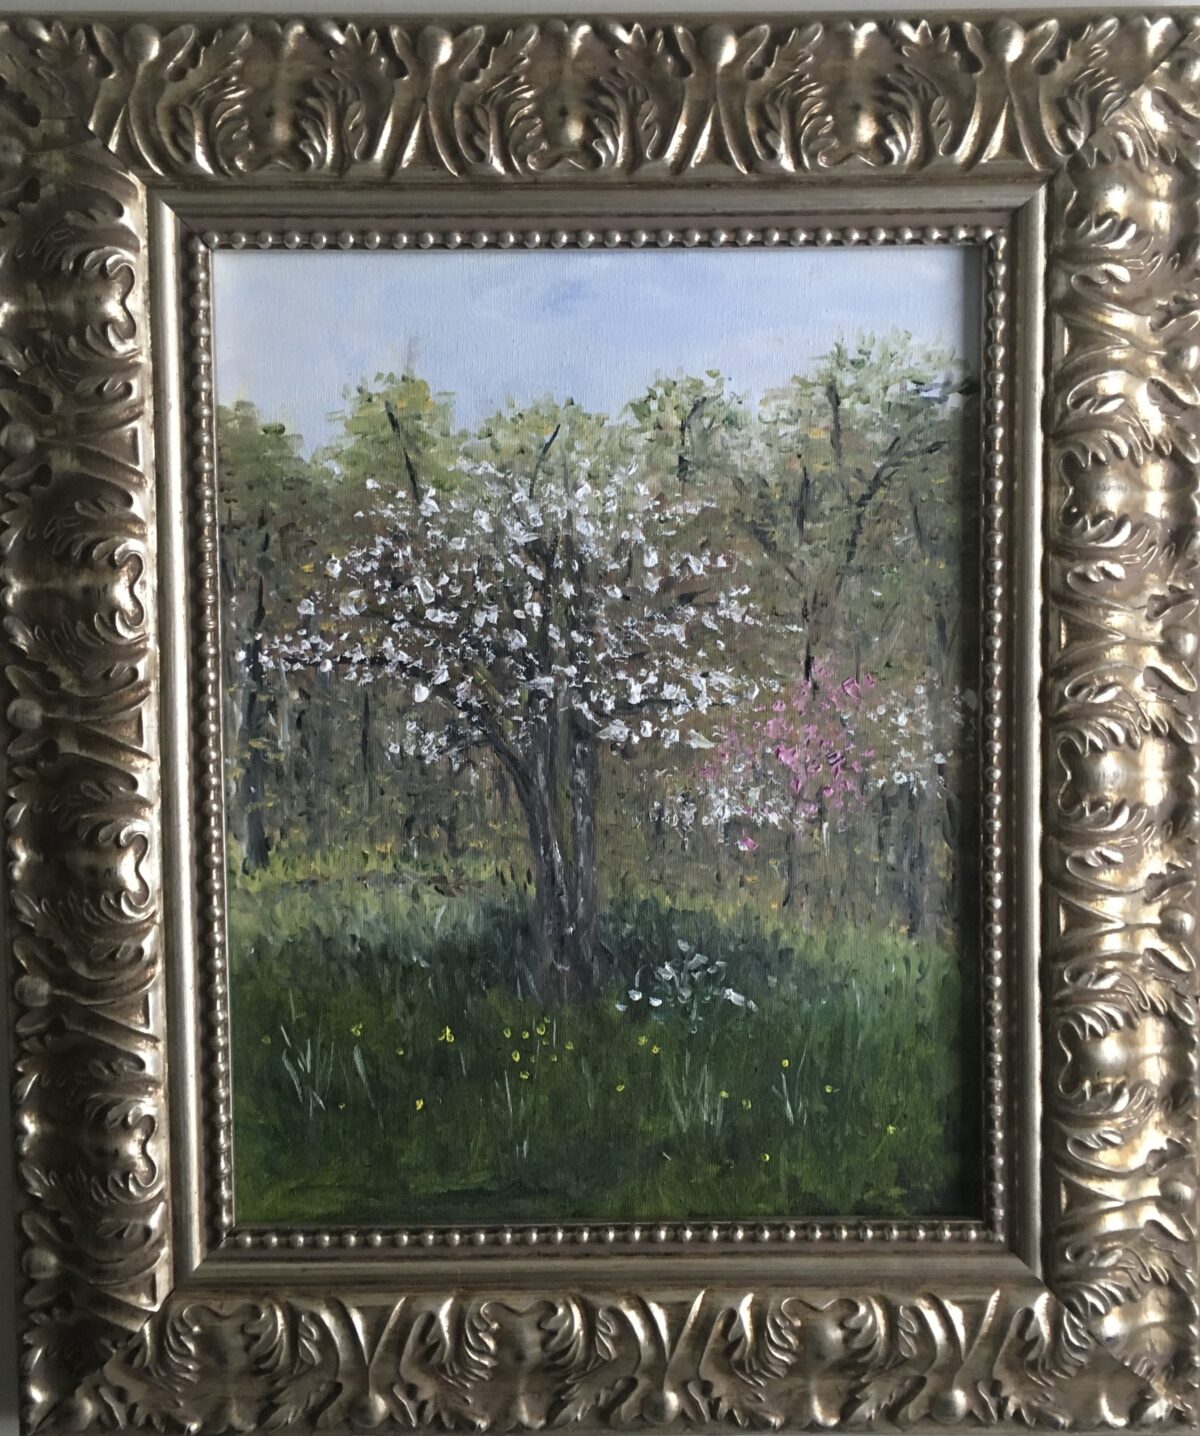 111 - Dogwood Spring - 8 x 10 - Landscape - Not Available - $100